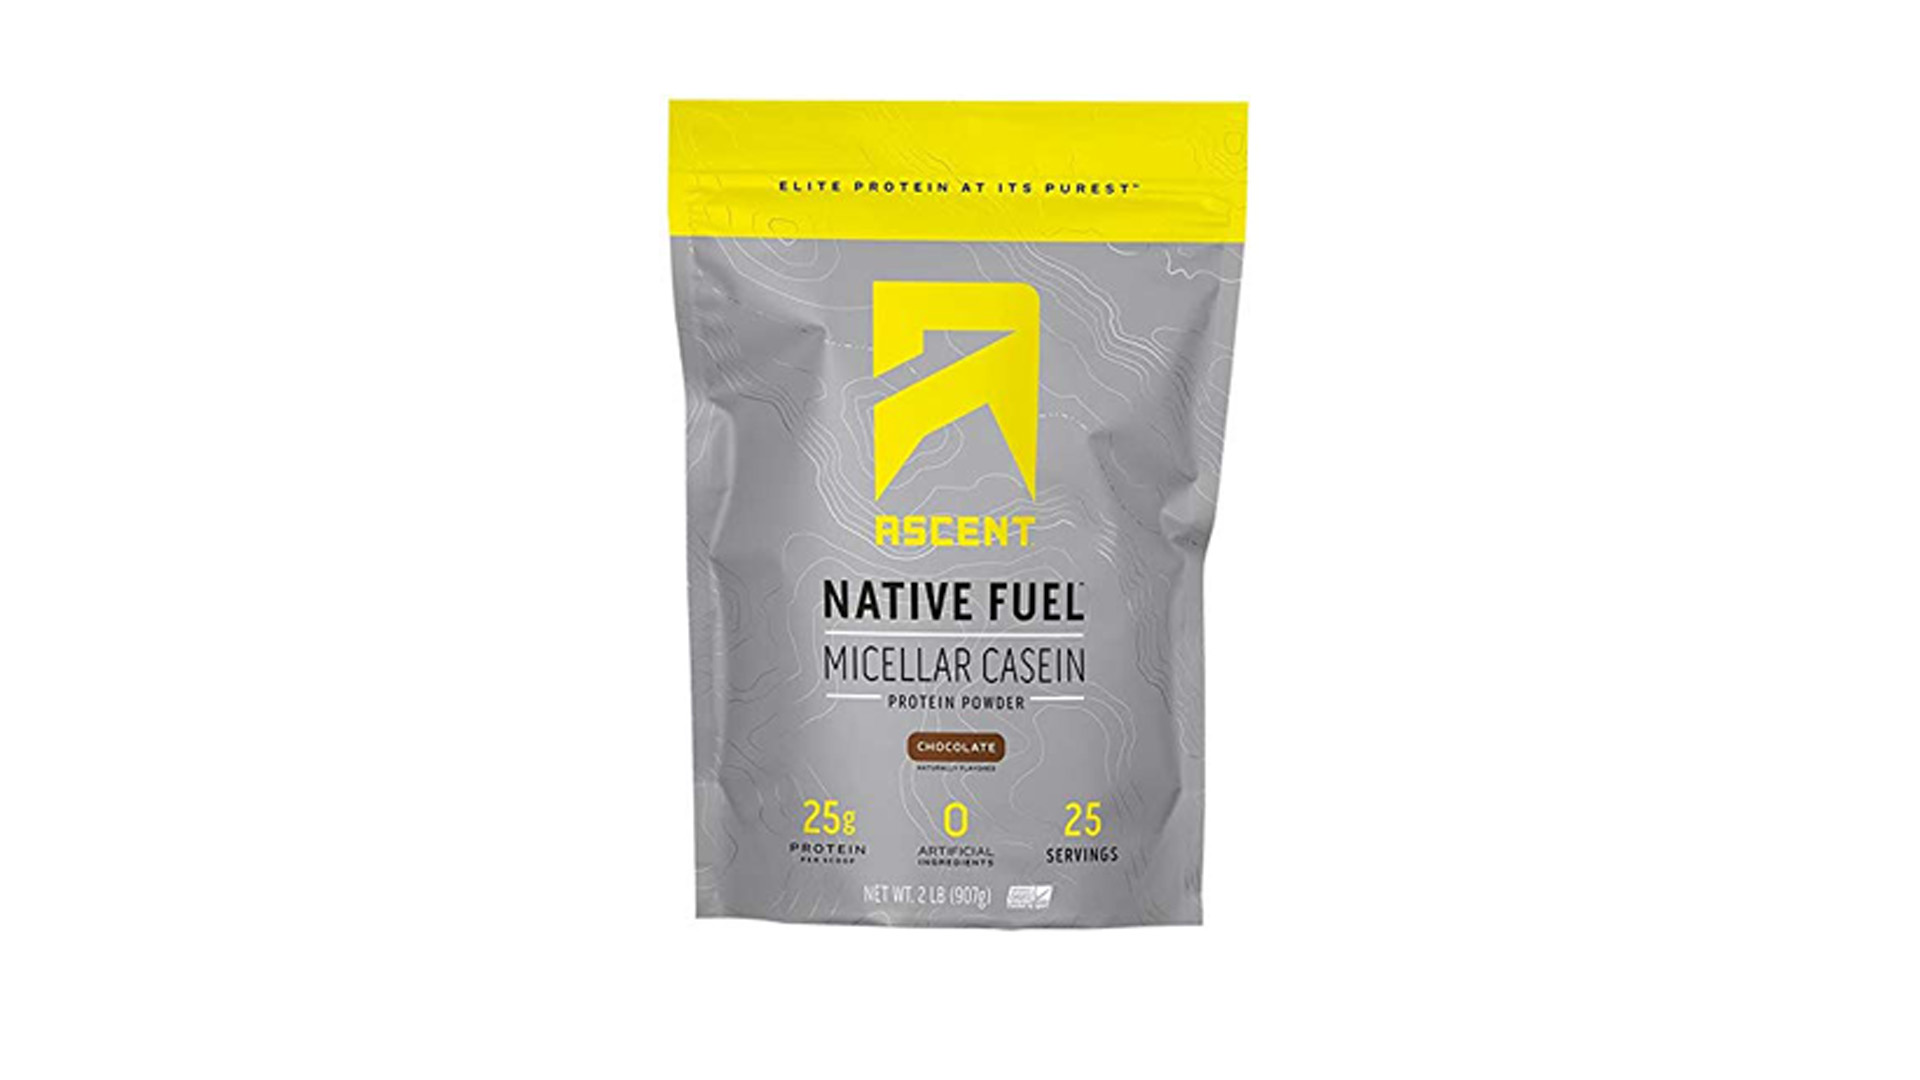 Ascent Native Fuel Micellar Casein Protein Powder